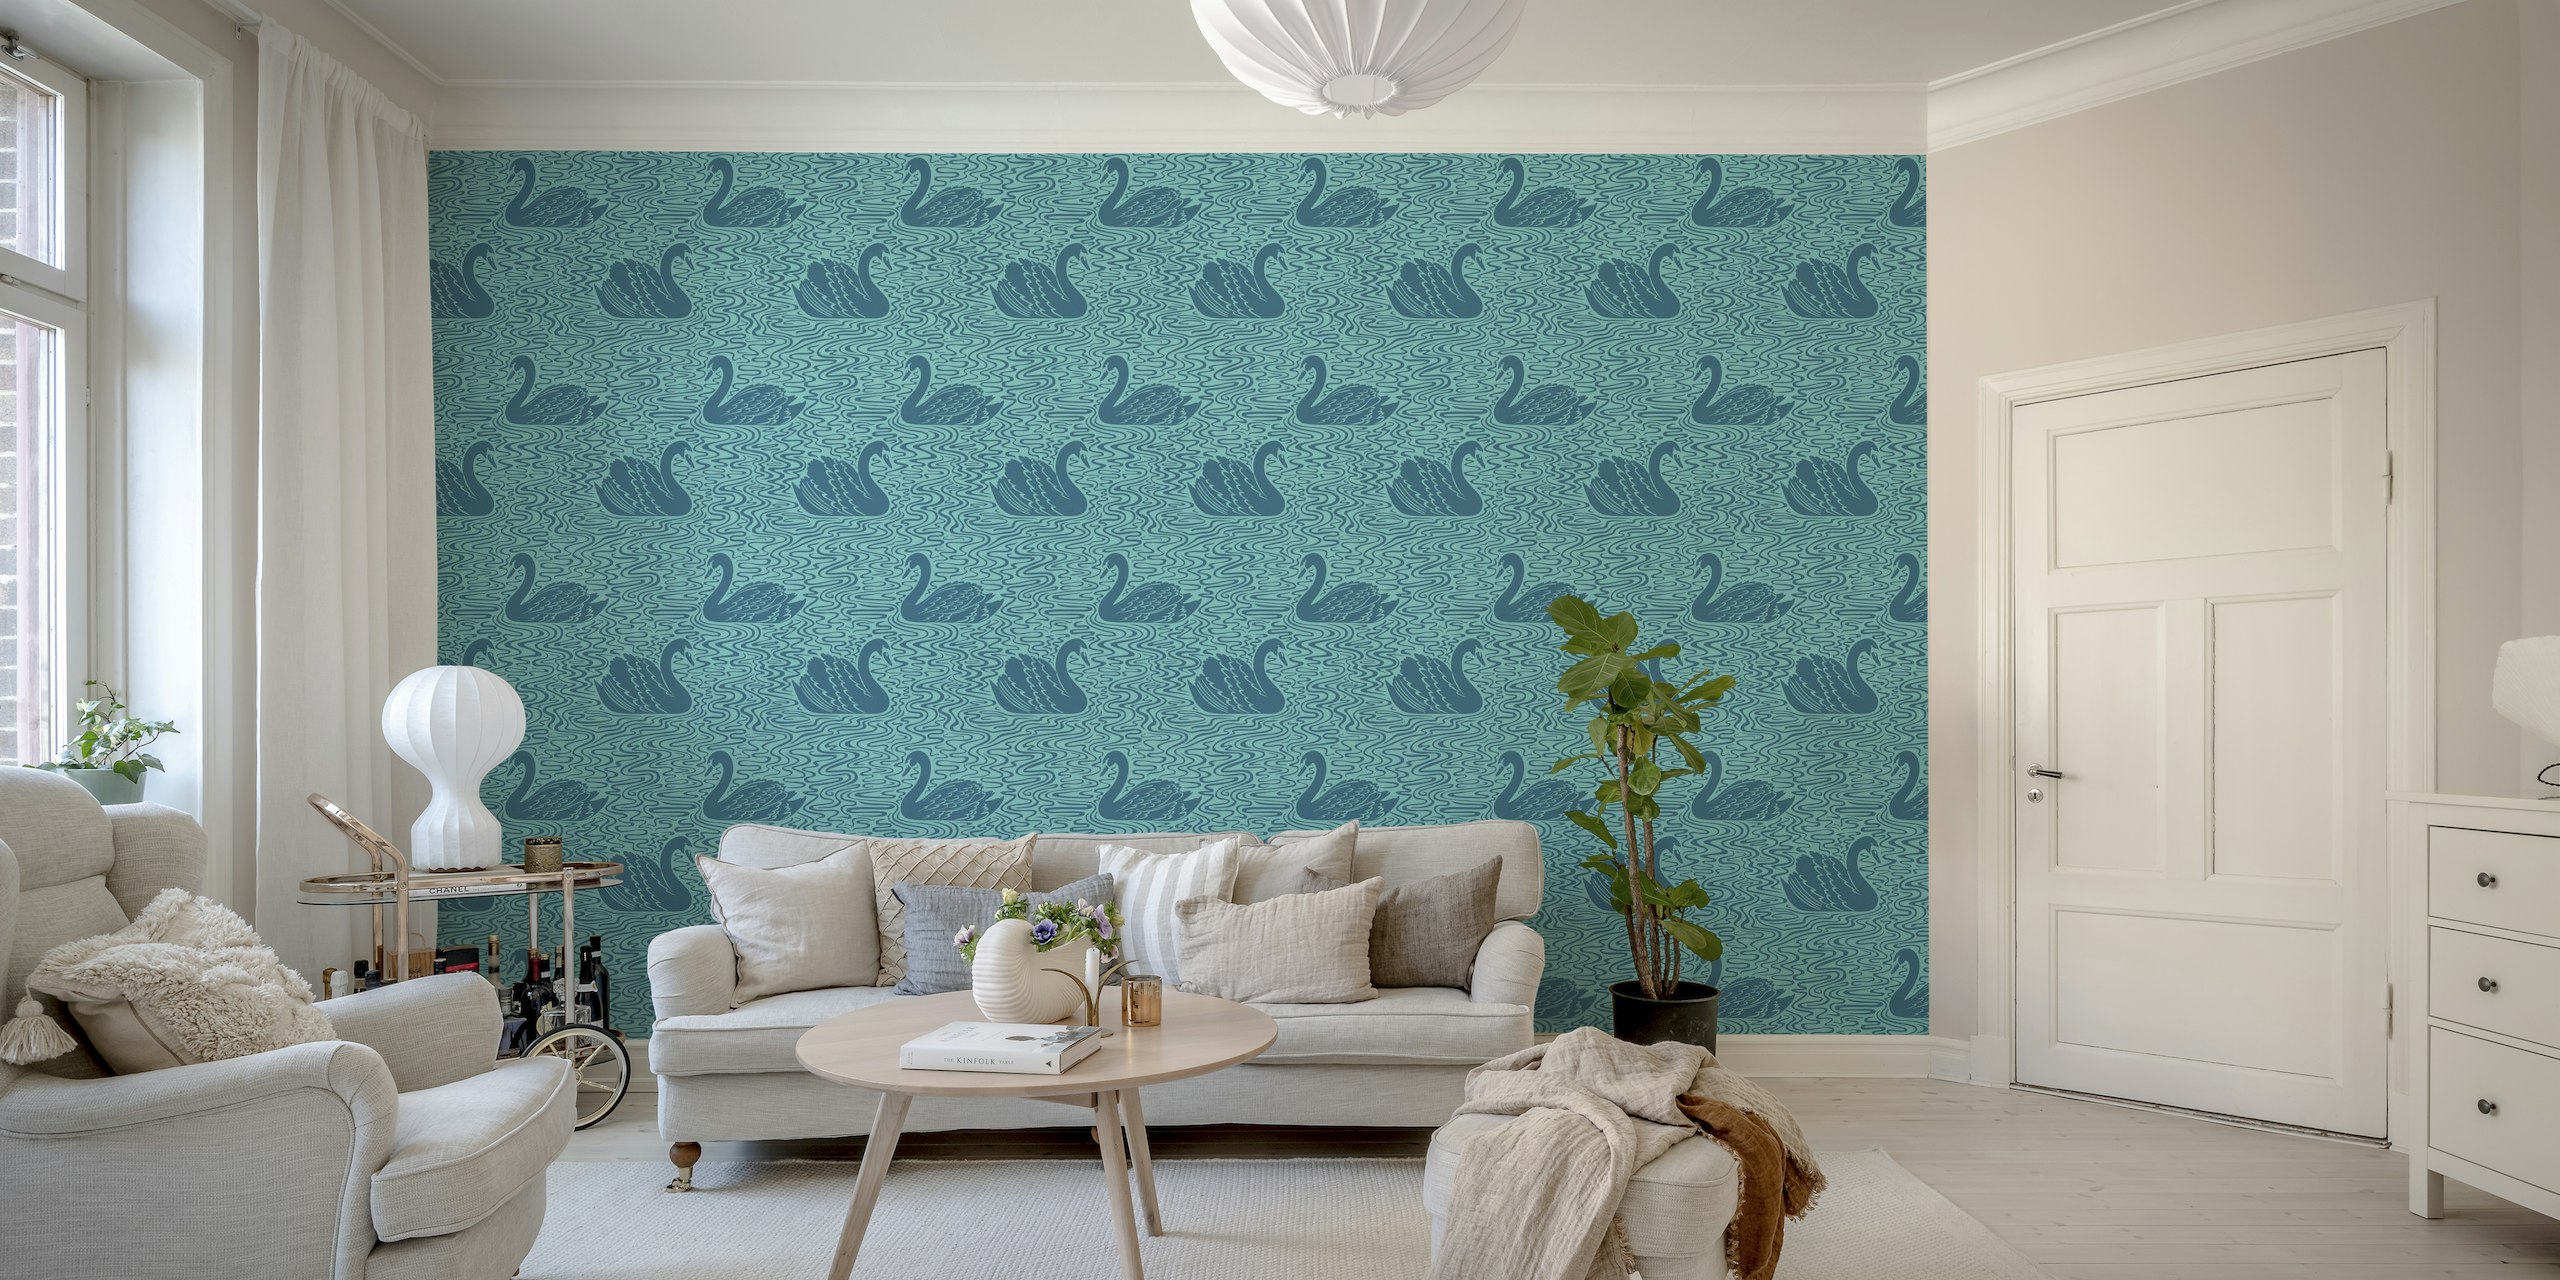 Swan Lake - teal on aqua turquoise blue papel de parede